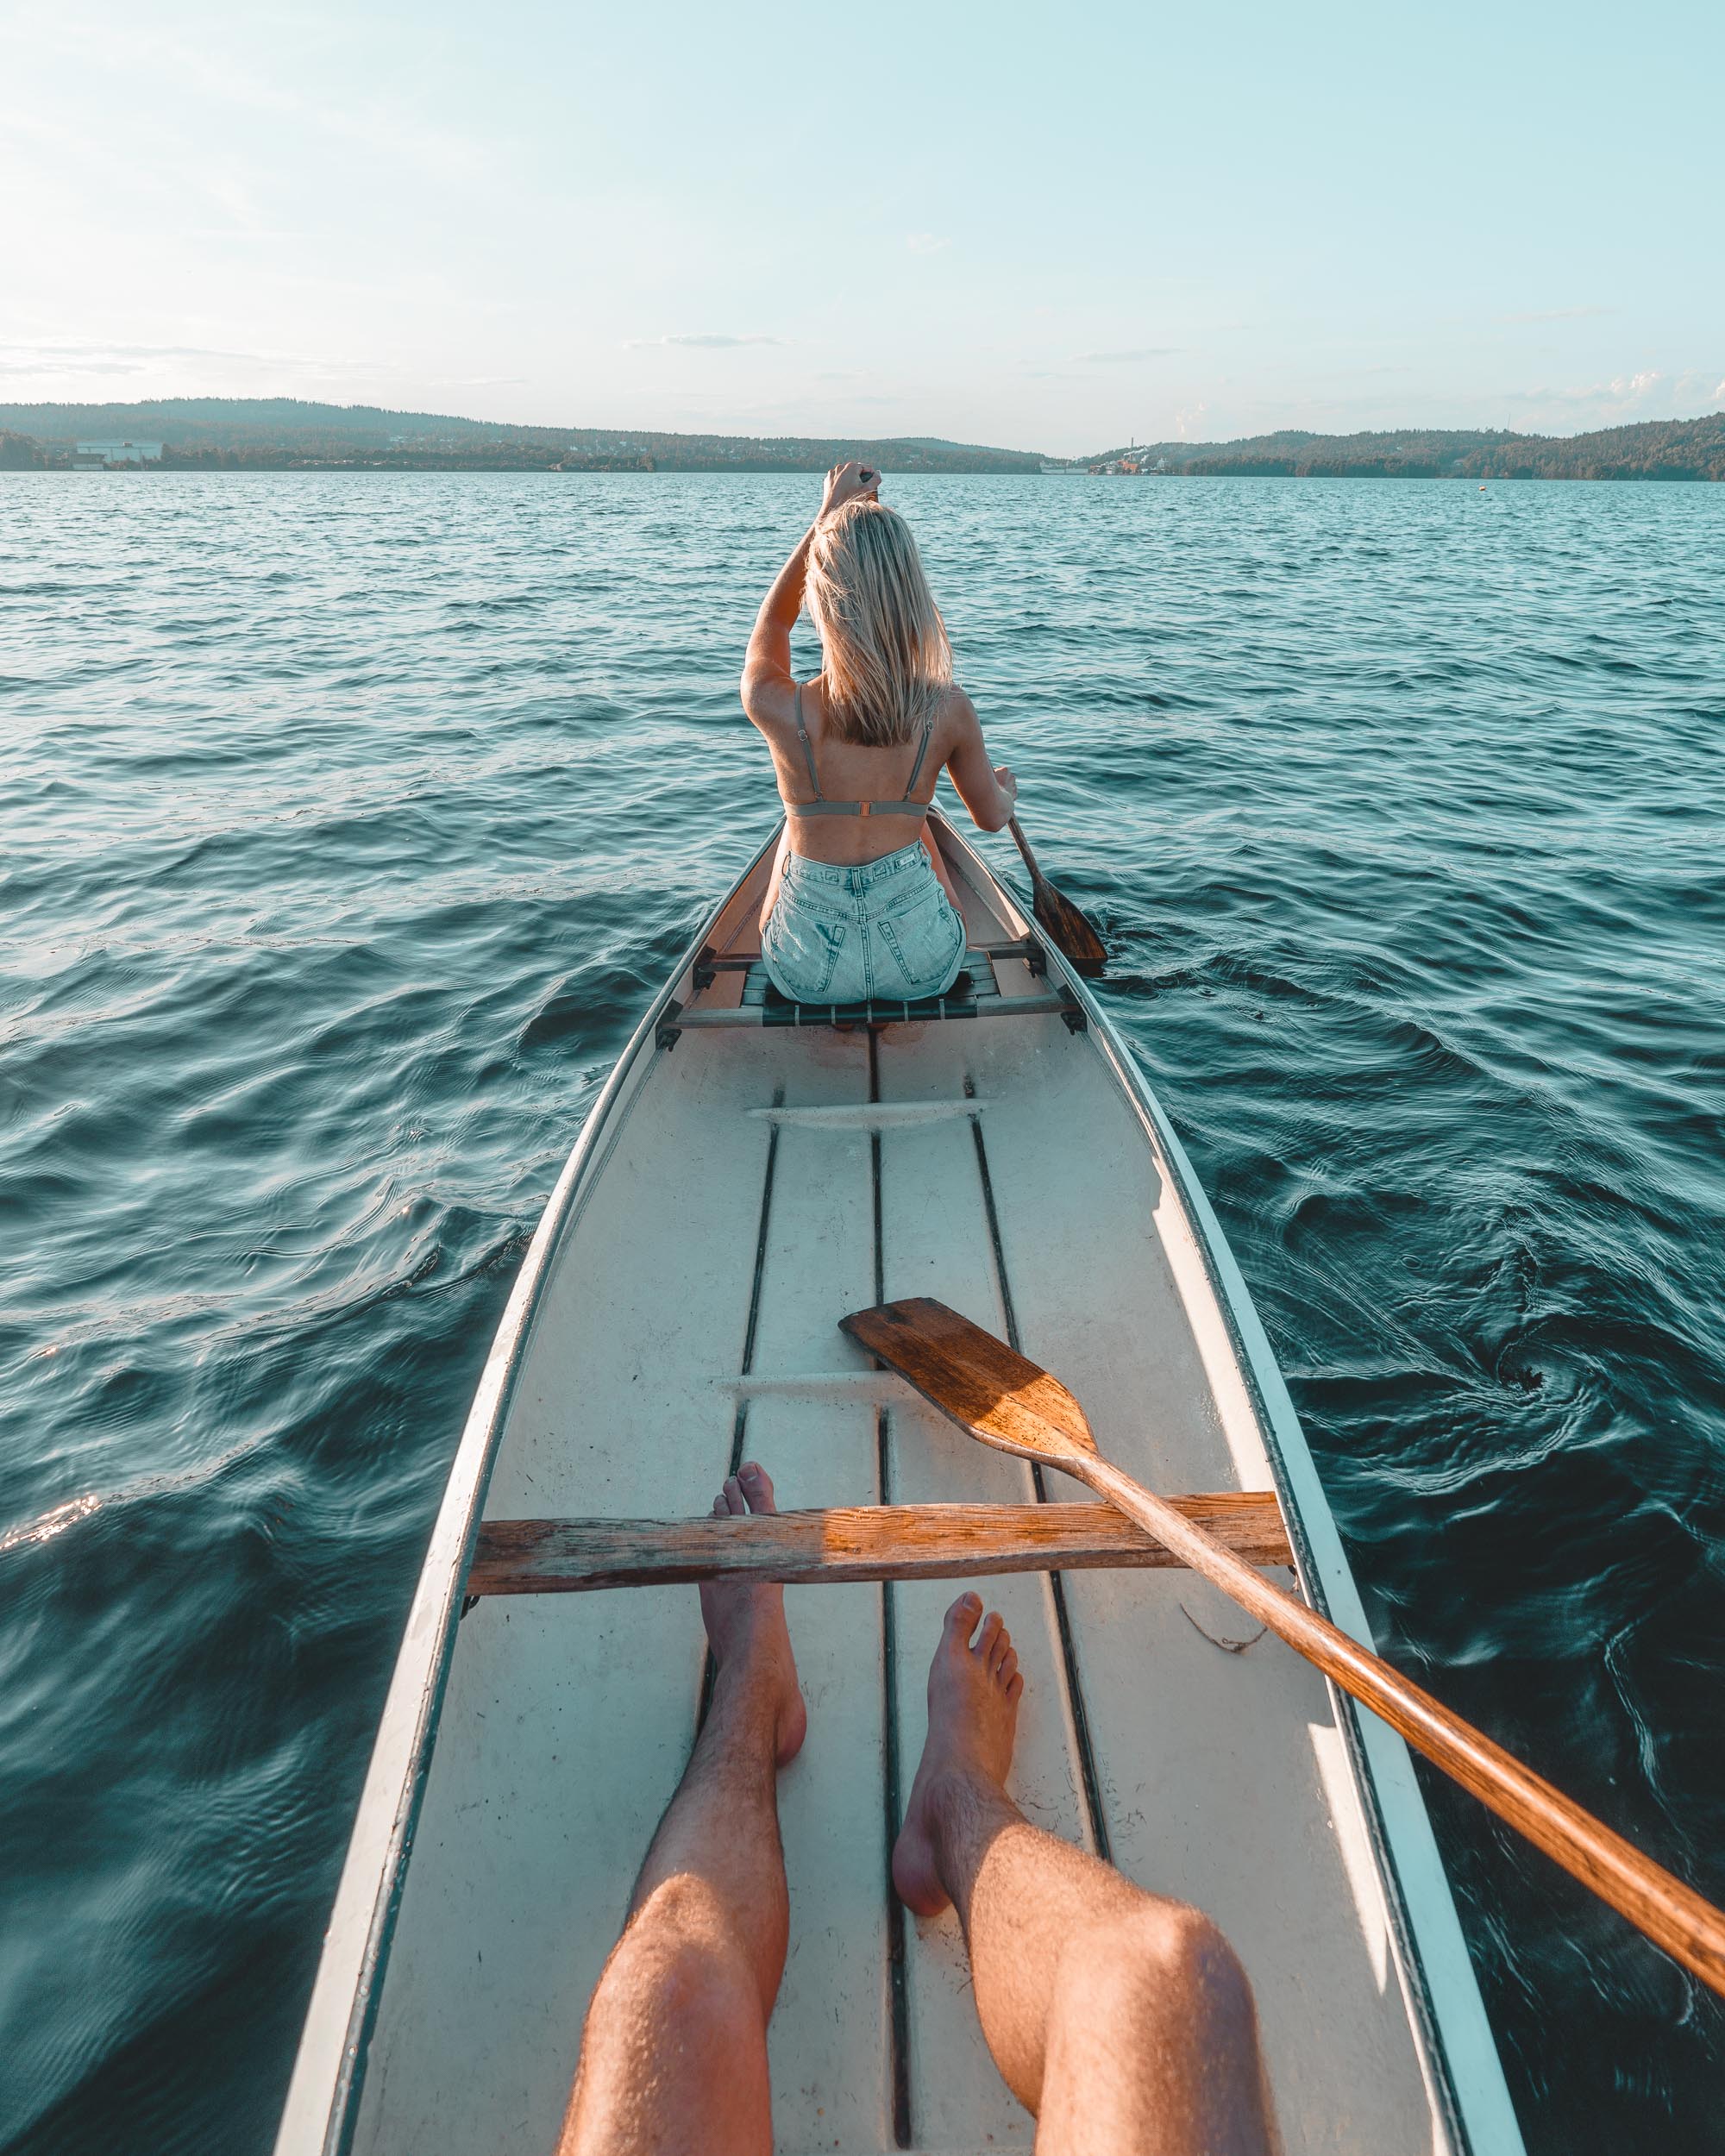 Canoeing at Baldersnas lake in Dalsland, West Sweden via @finduslost